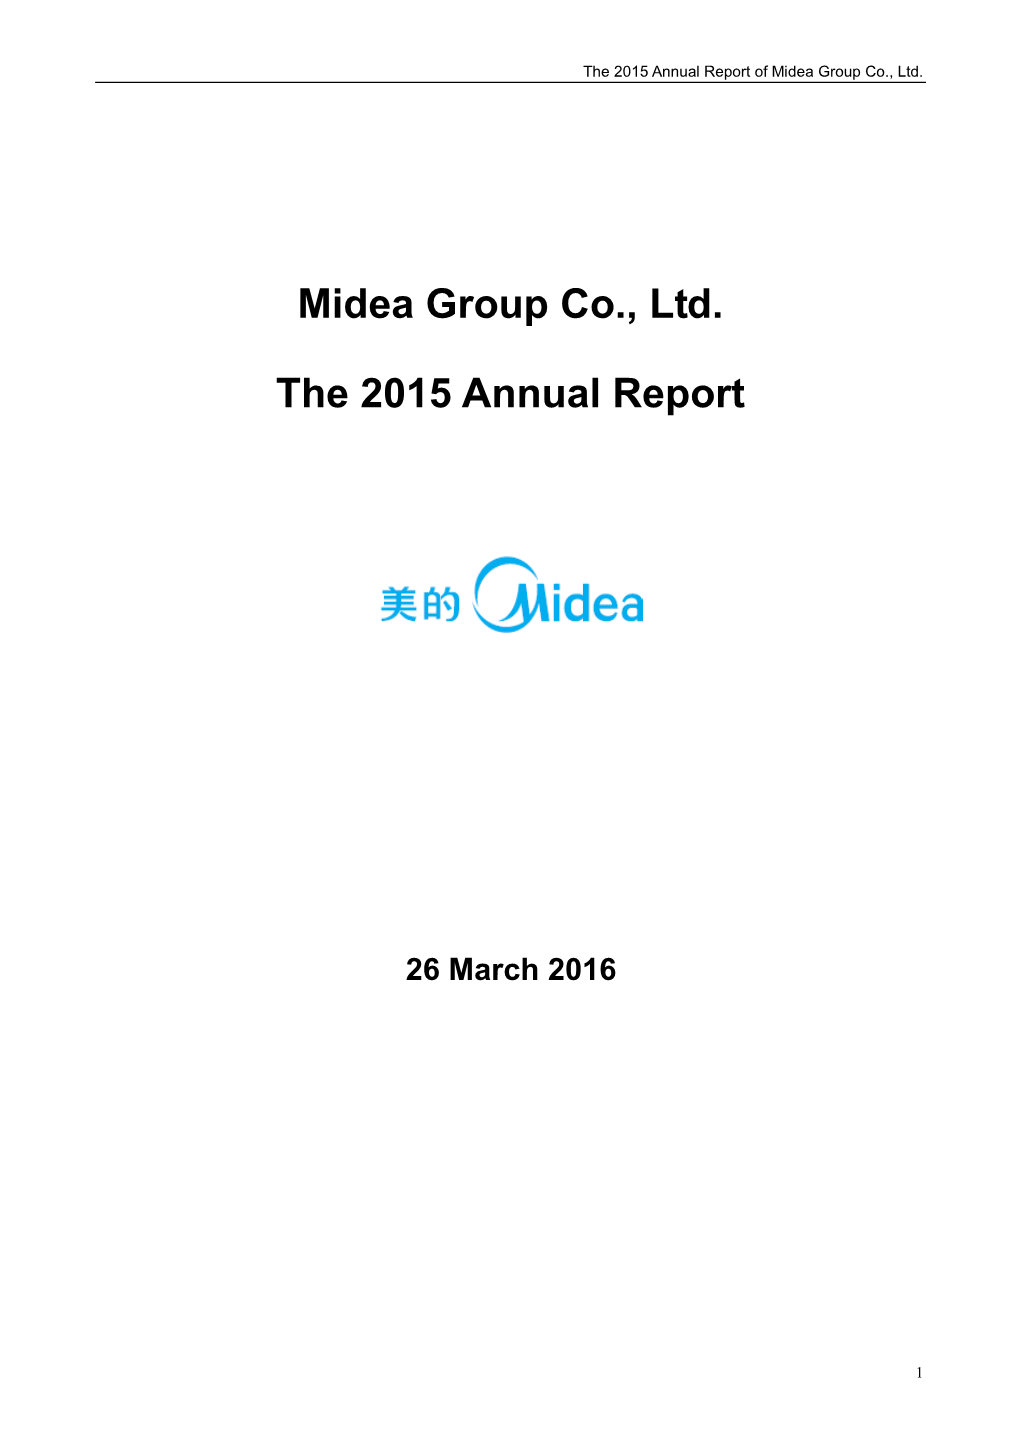 Midea Group Co., Ltd. the 2015 Annual Report